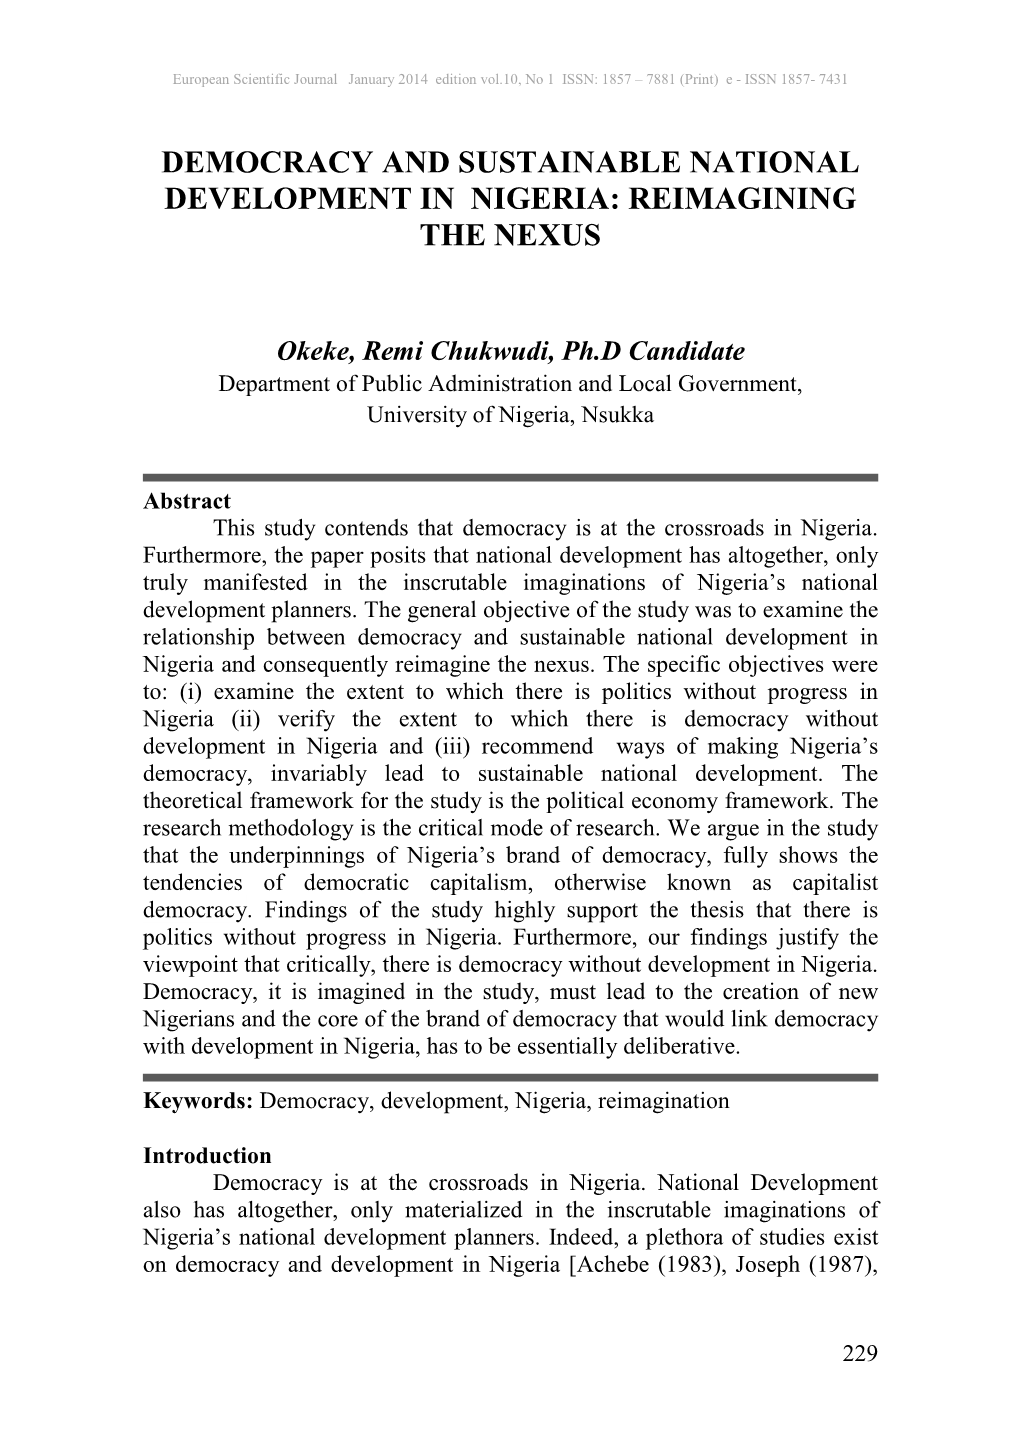 Democracy and Sustainable National Development in Nigeria: Reimagining the Nexus